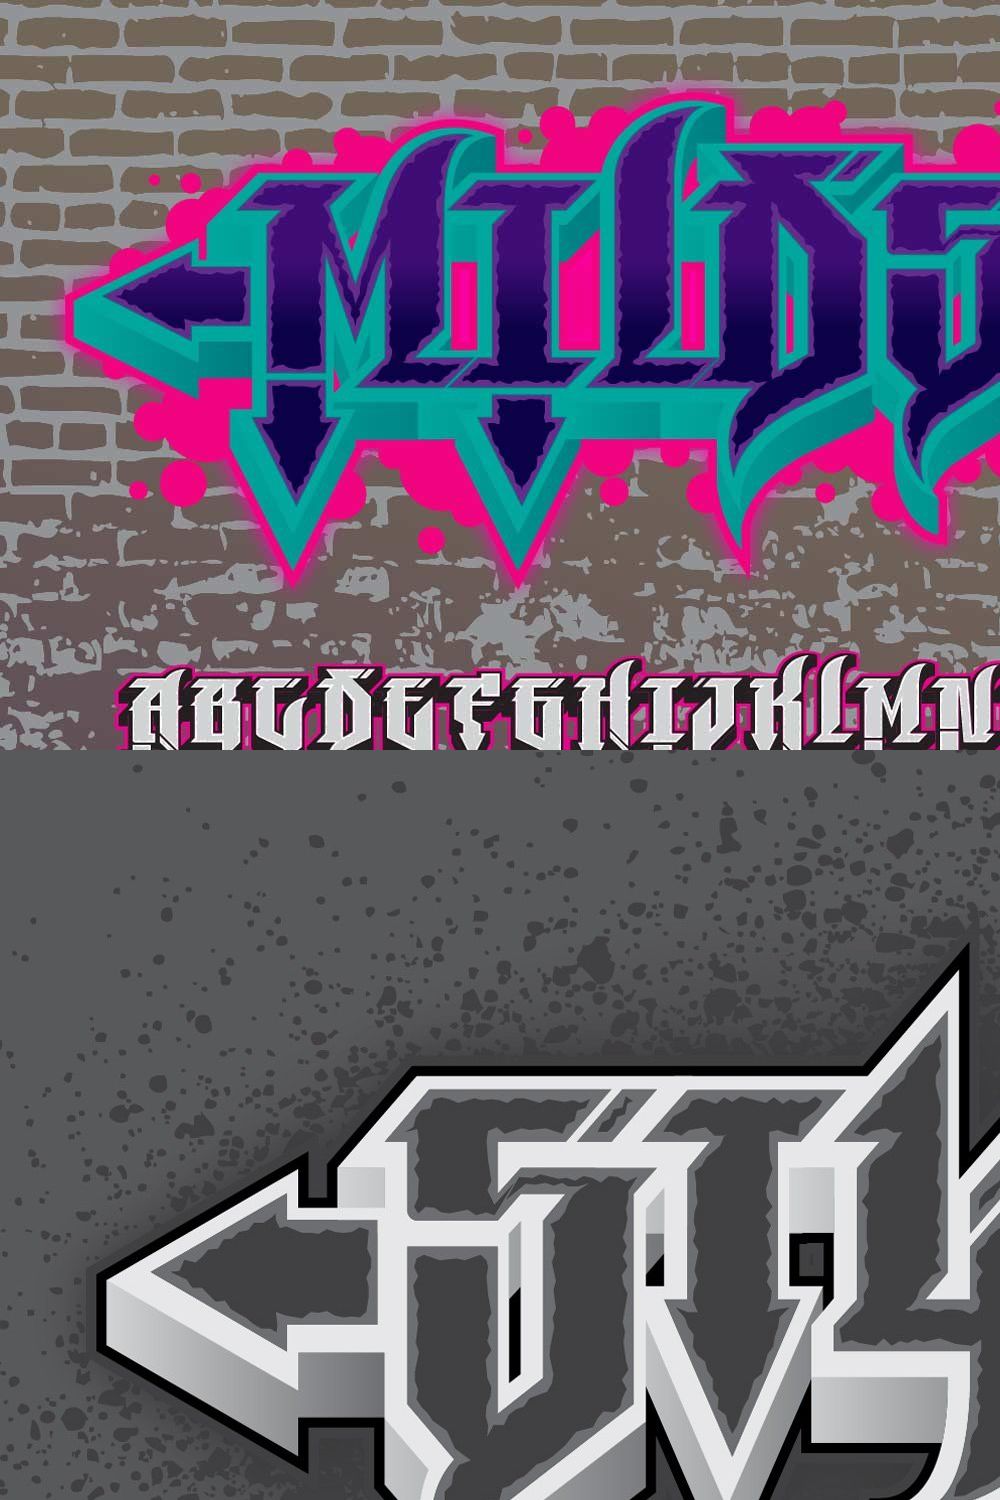 Graffiti Fonts | MildStyle pinterest preview image.